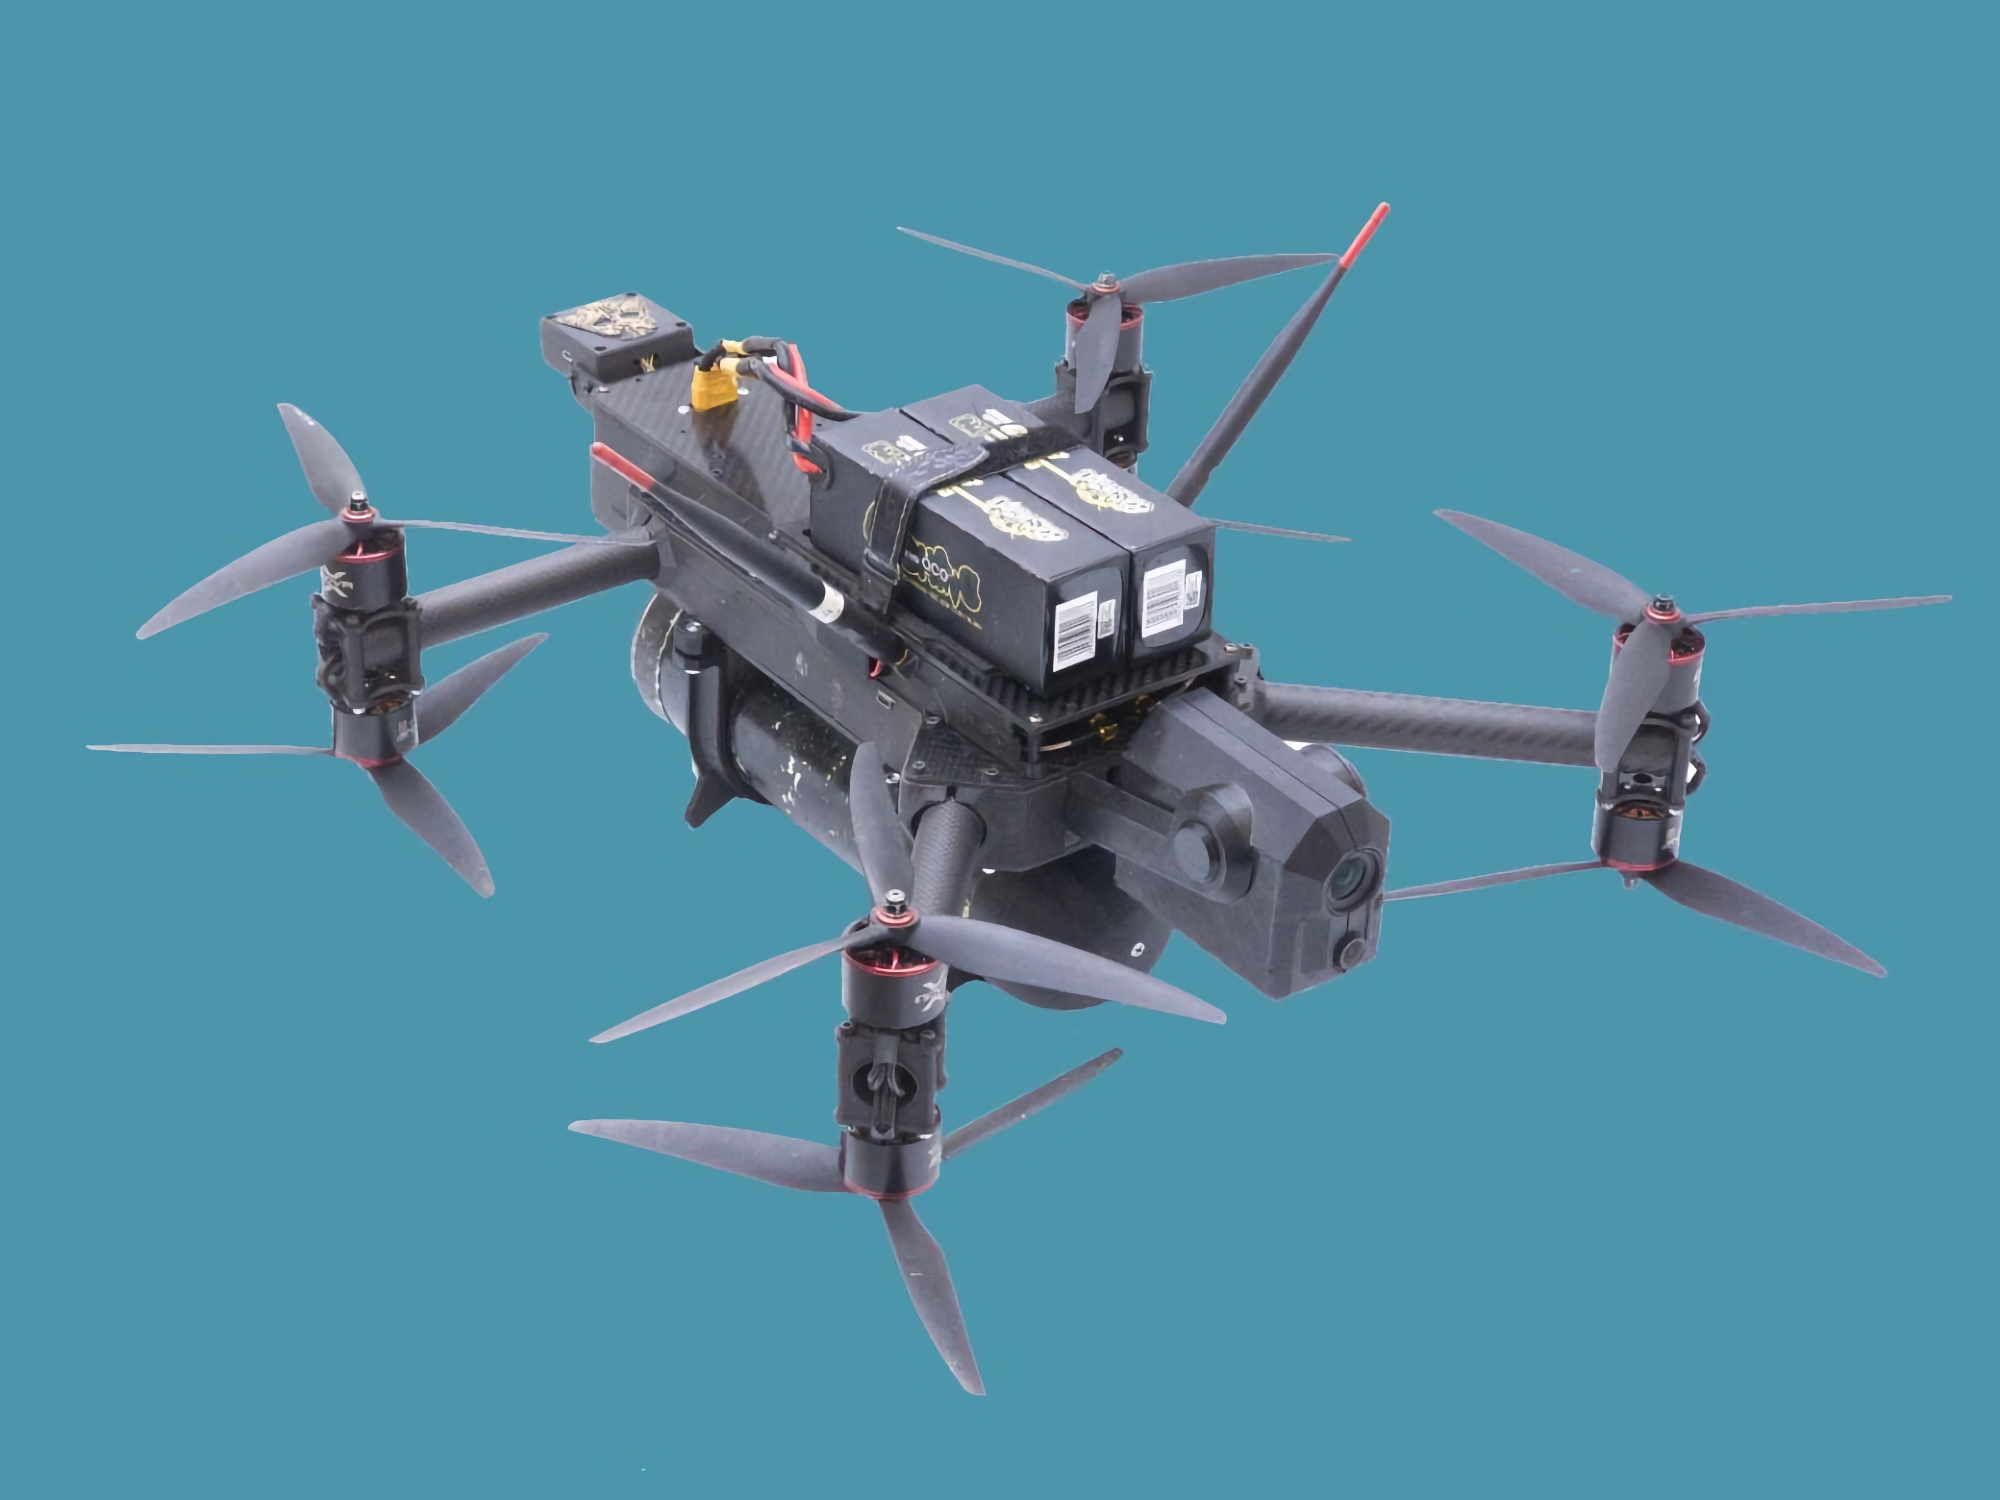 Ukraine har skabt en kompakt angrebsdrone SkyKnight 2 med AI, der kan modstå elektronisk krigsførelse og anti-drone-våben